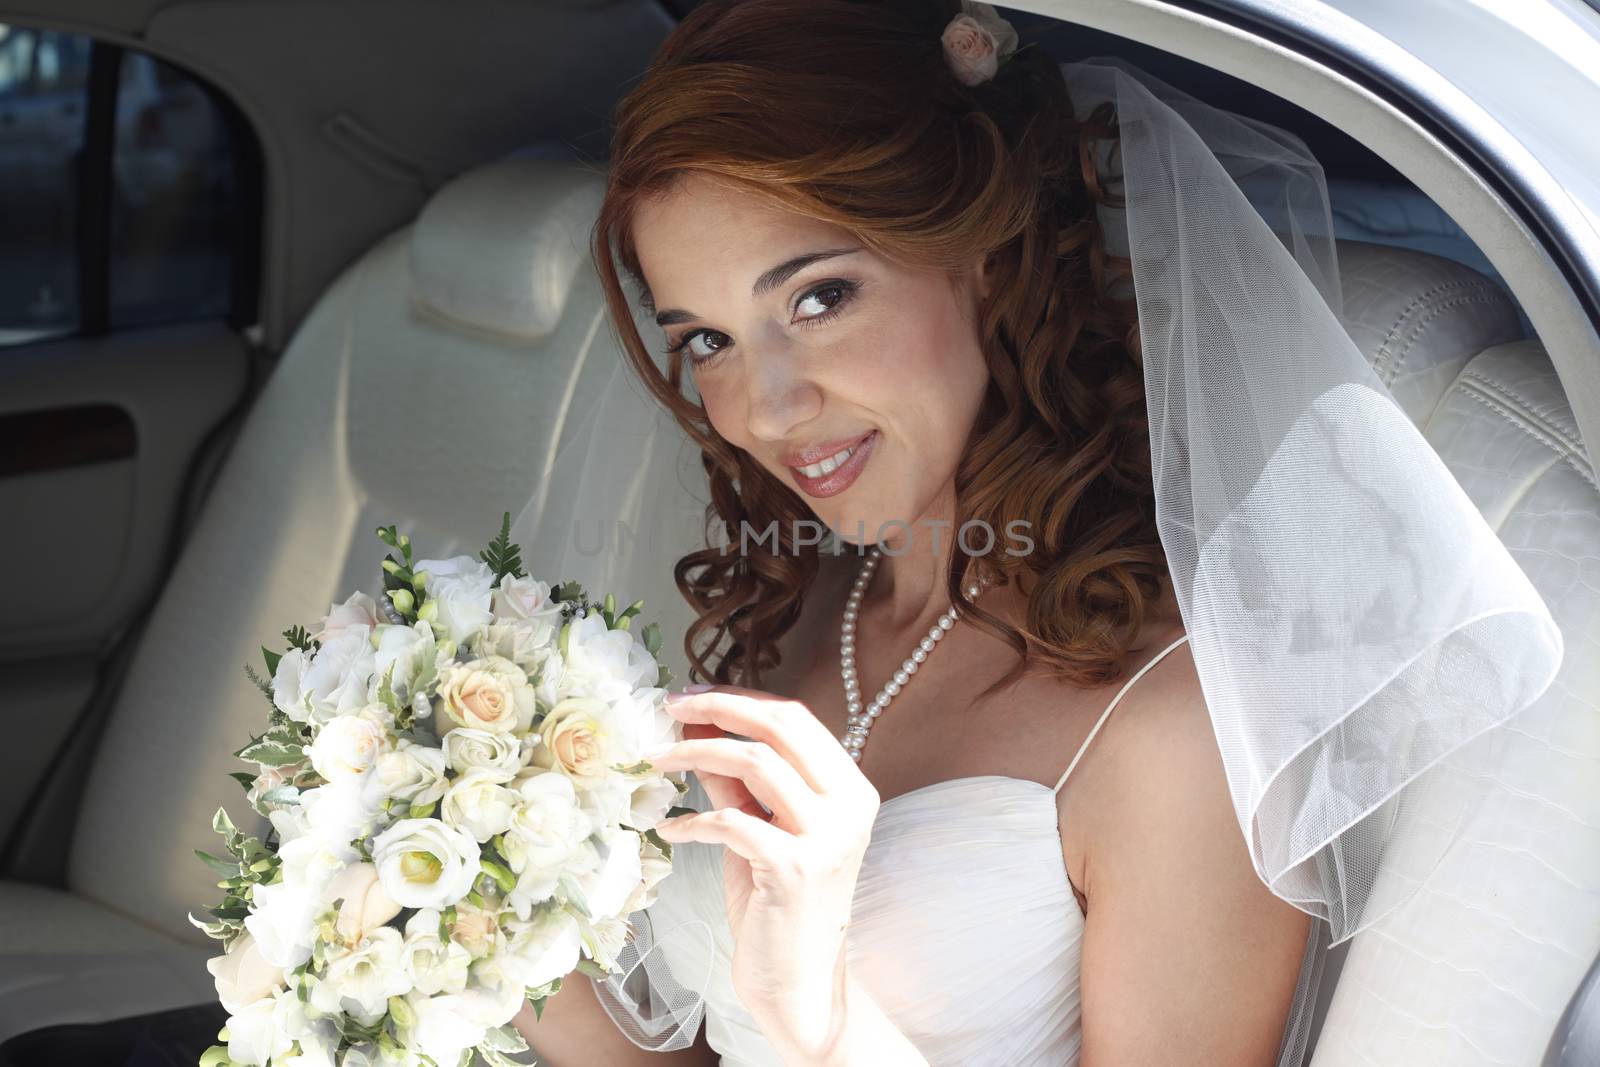 The beautiful bride in the automobile